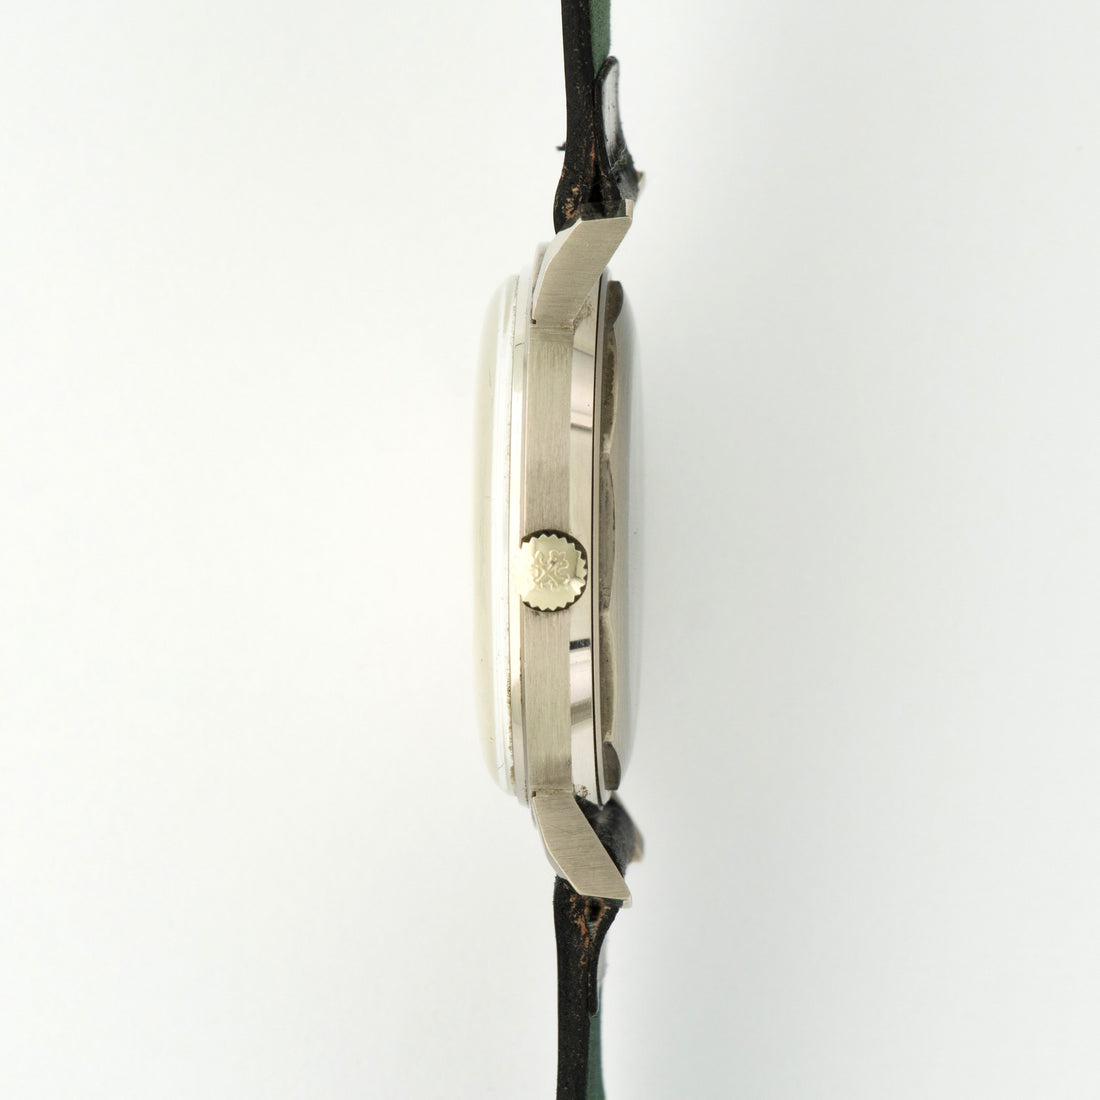 Patek Philippe White Gold Calatrava Watch Ref. 3445G